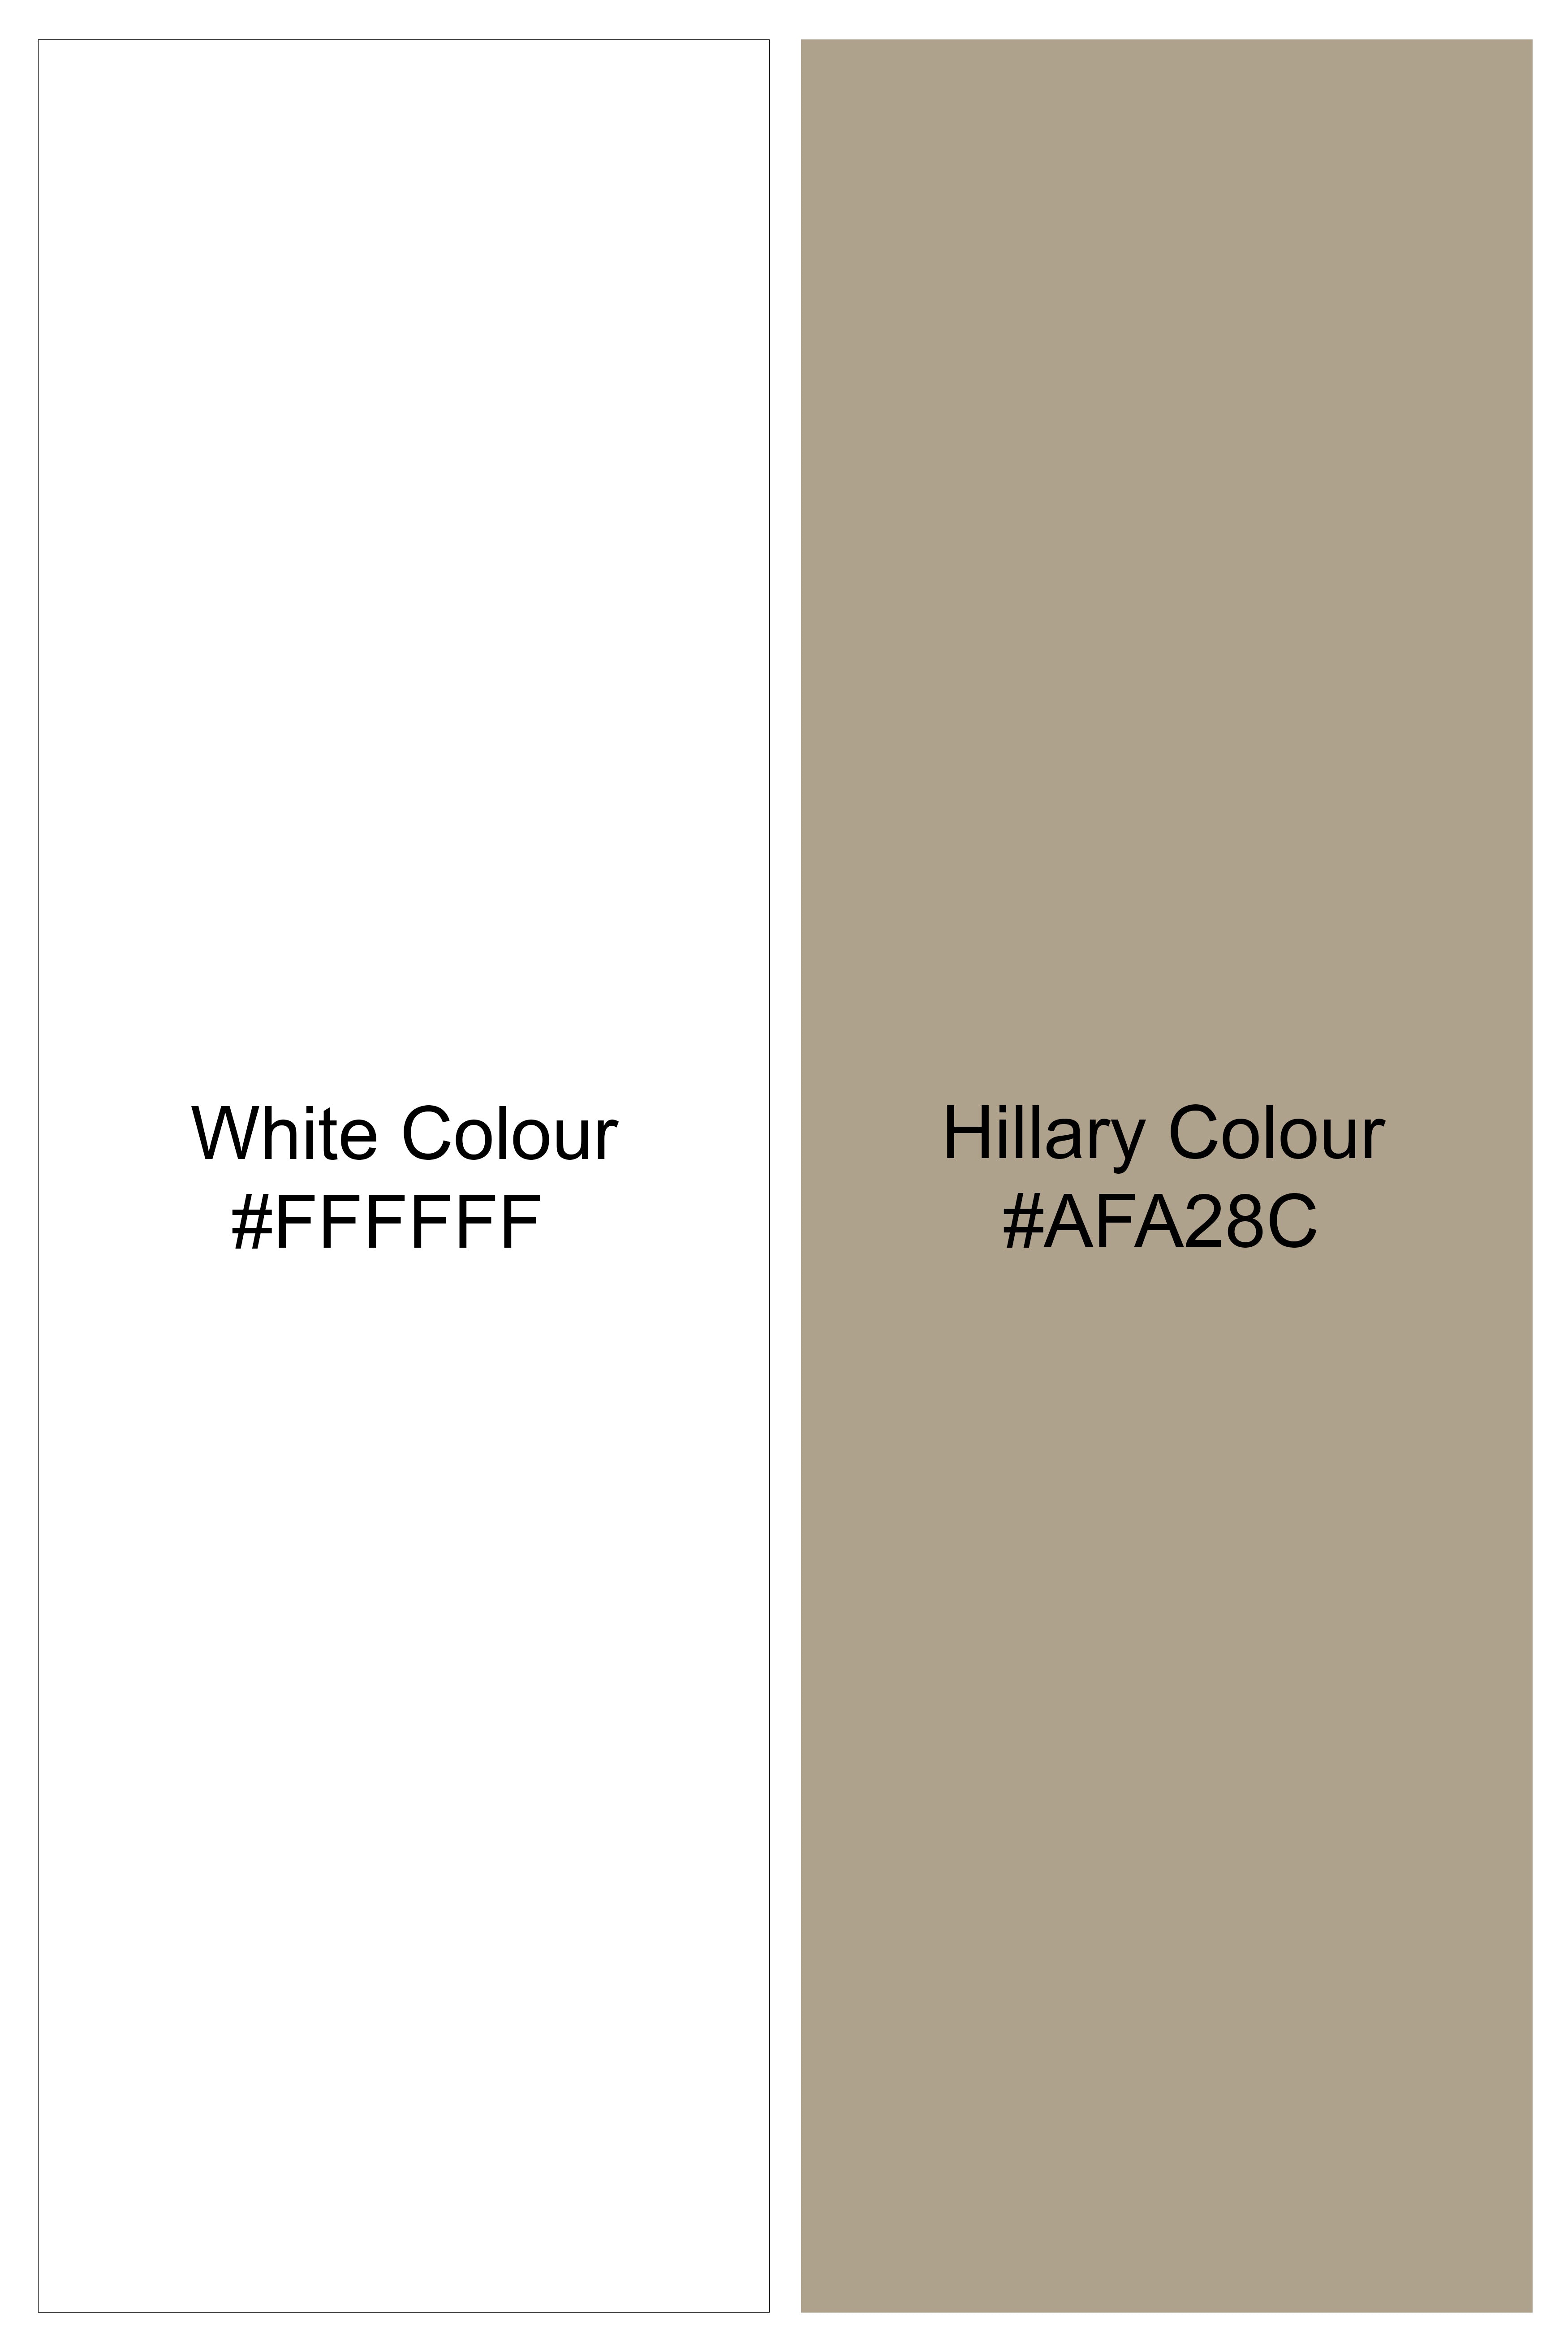 Bright White and Hilary Brown Premium Cotton Jersey T-Shirt TS913-S, TS913-M, TS913-L, TS913-XL, TS913-XXL